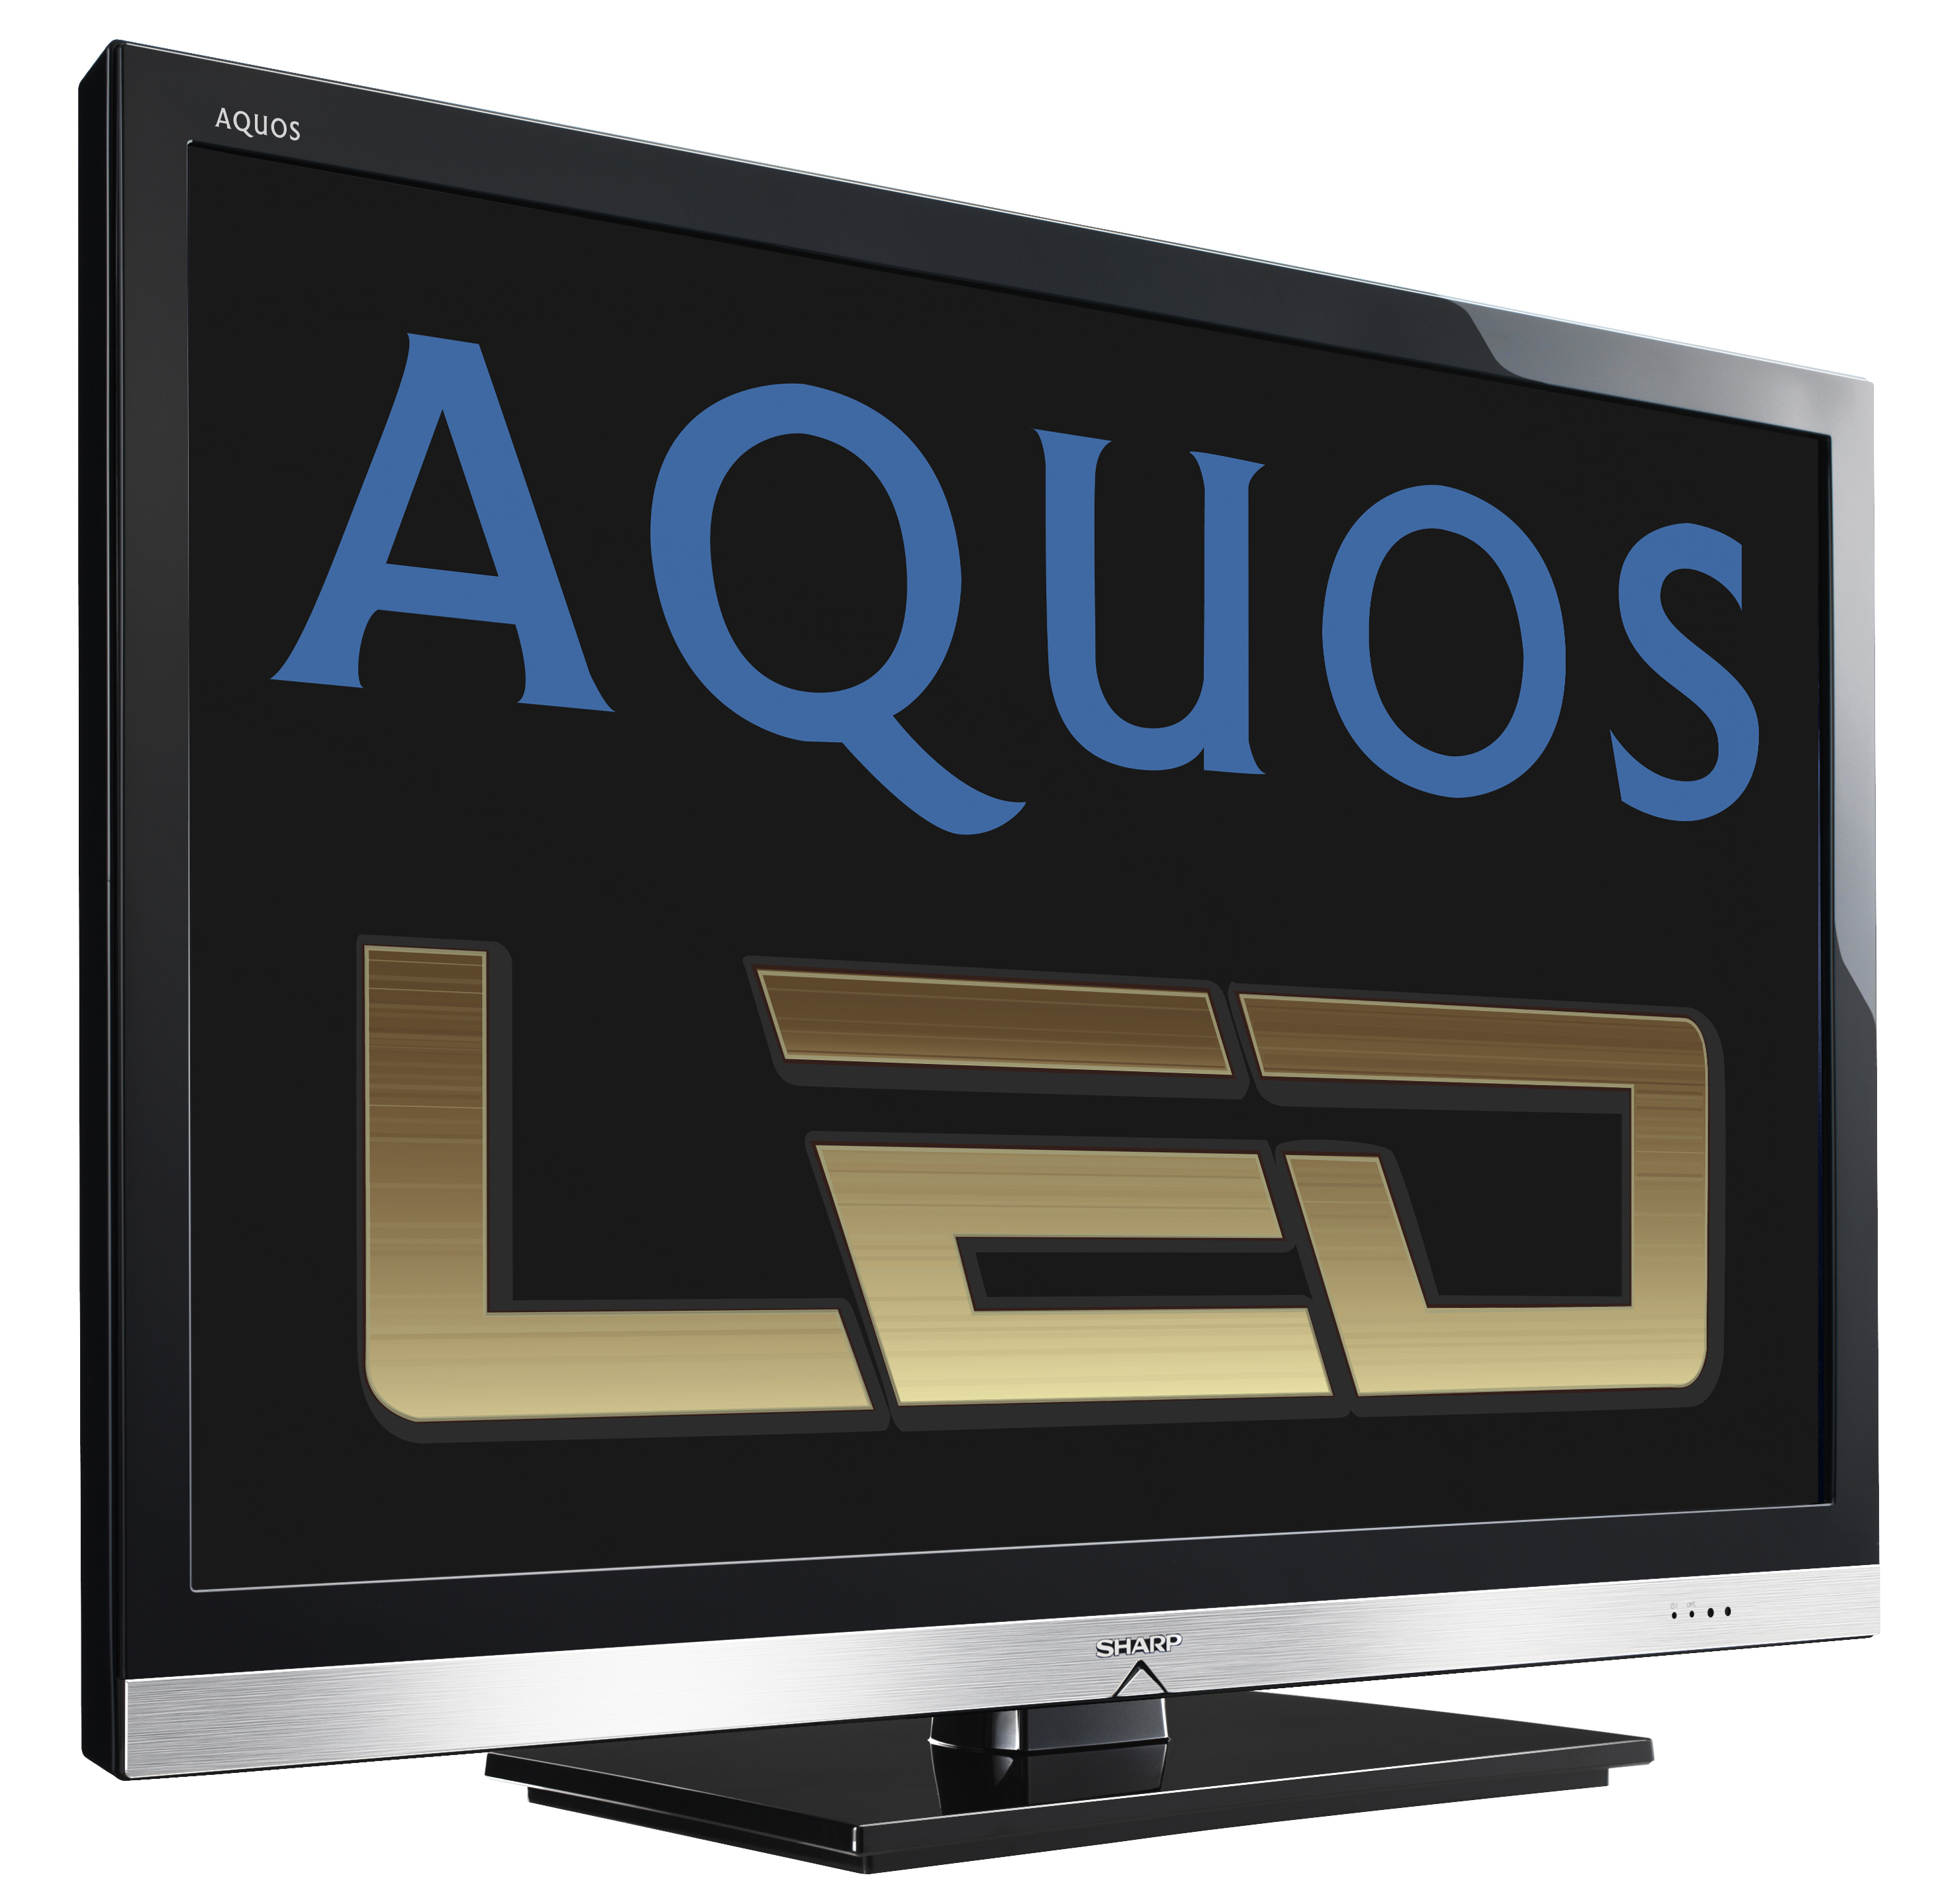 Sharp Aquos 52 Inch Tv Manual Smart TV Reviews.